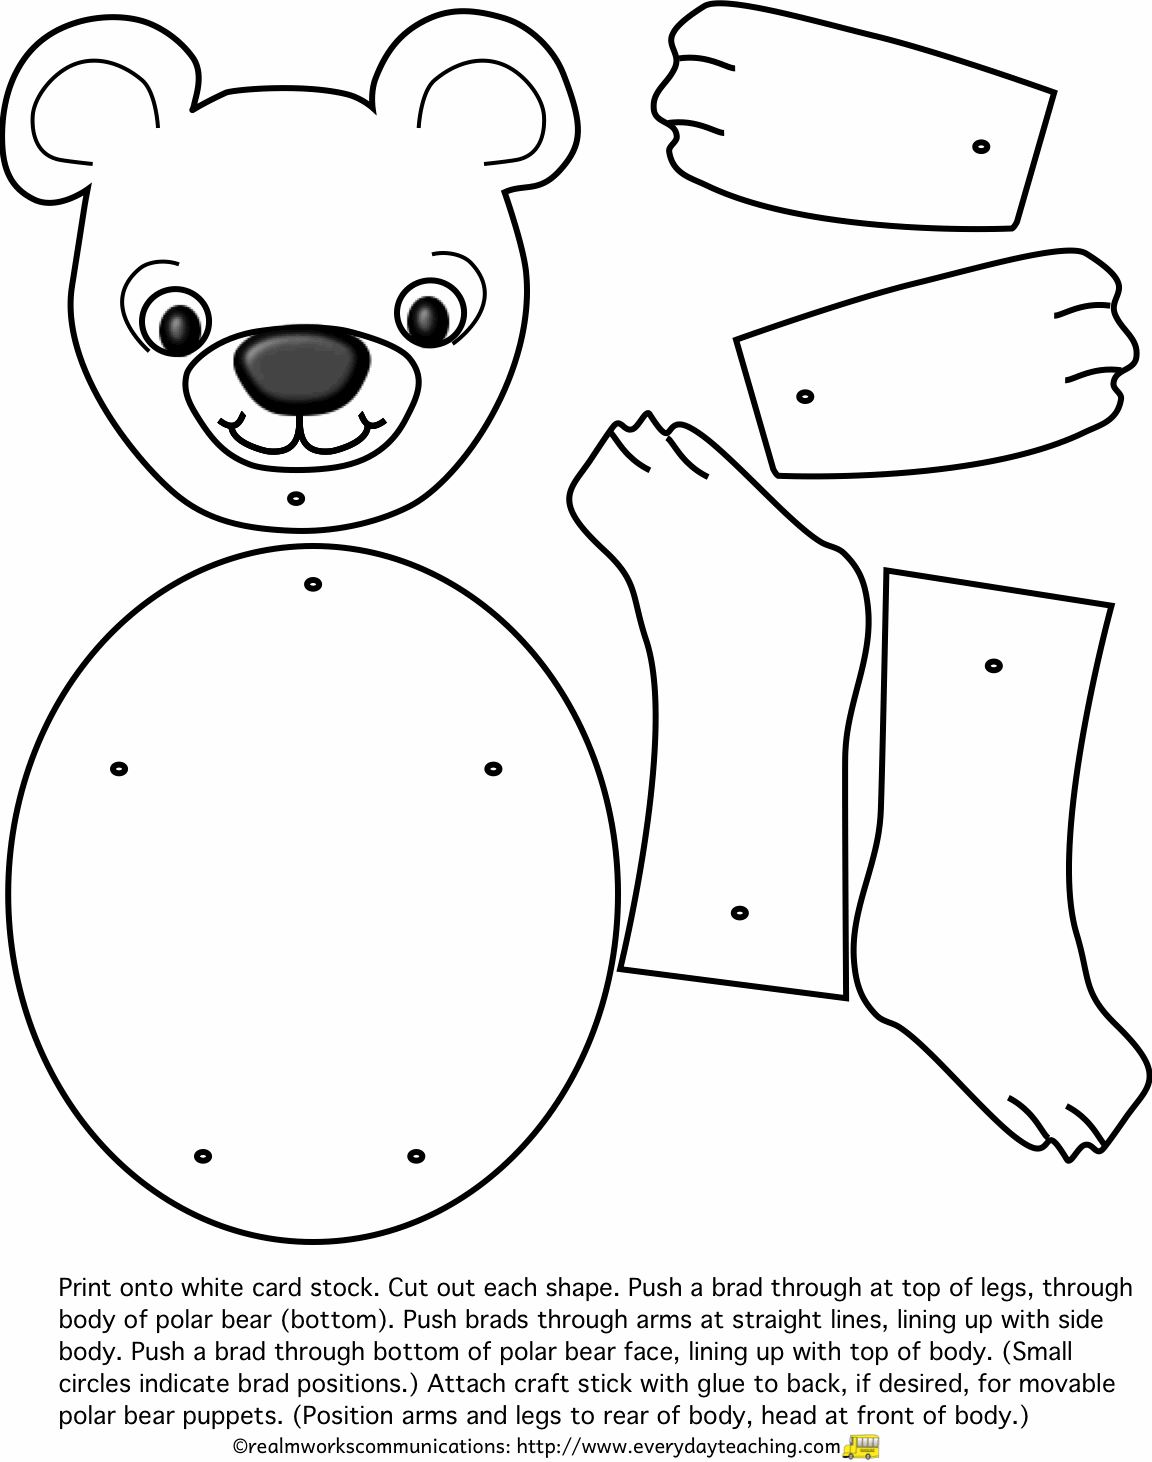 printable-polar-bear-craft-printable-word-searches